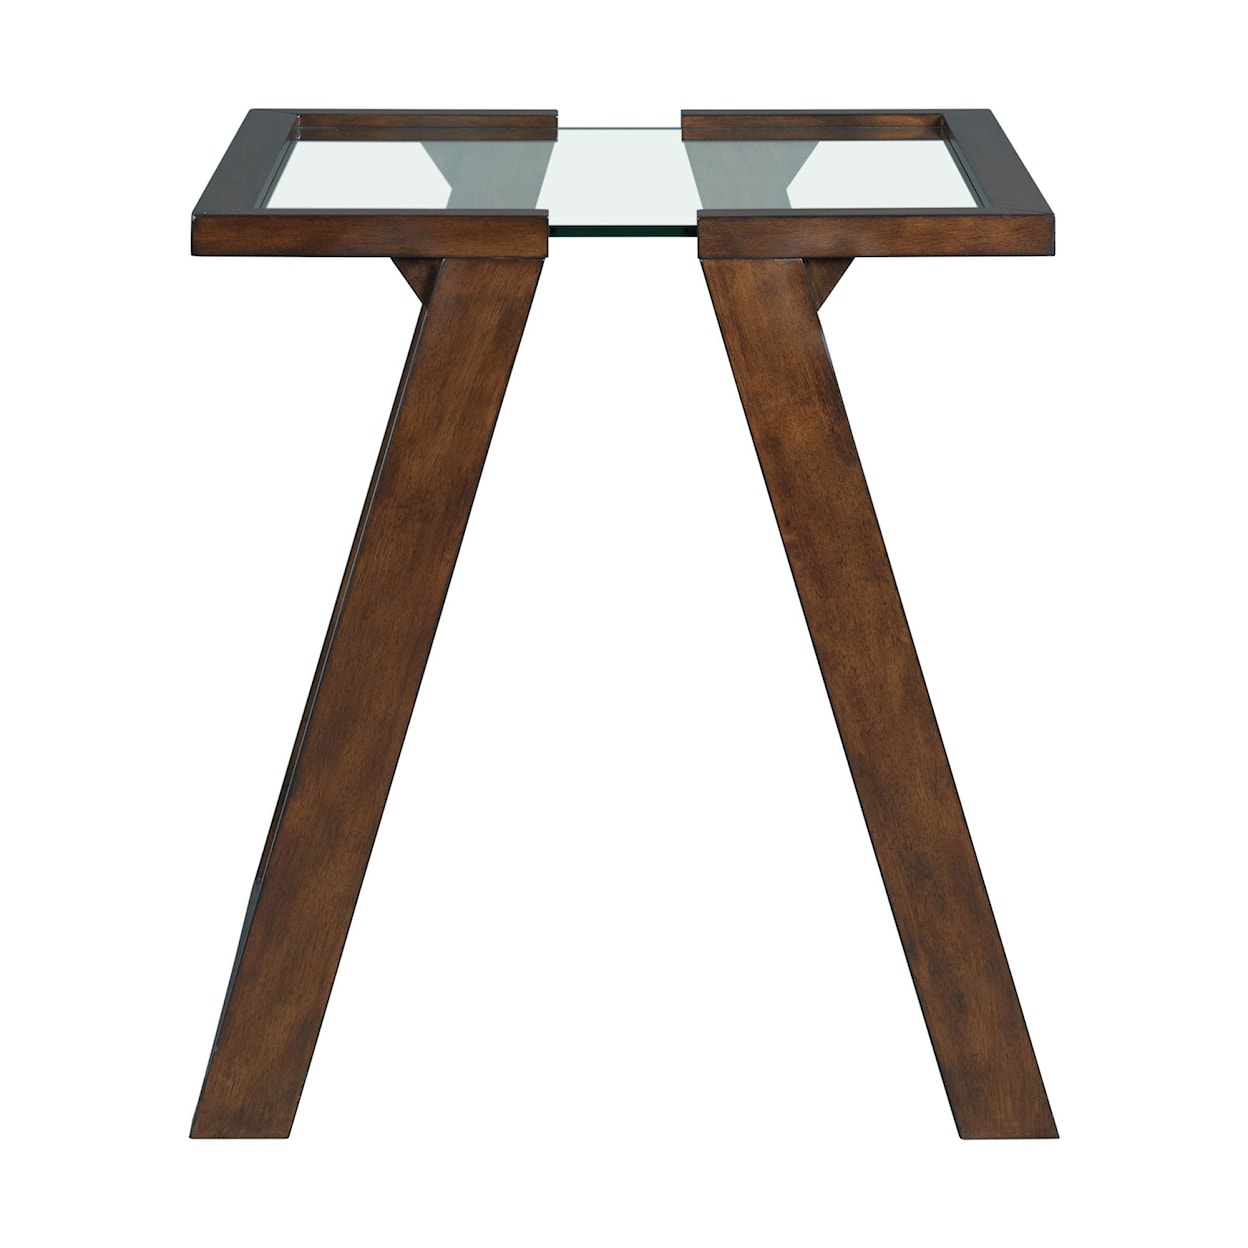 Elements International Kieran Rectangular End Table in Dark Espresso